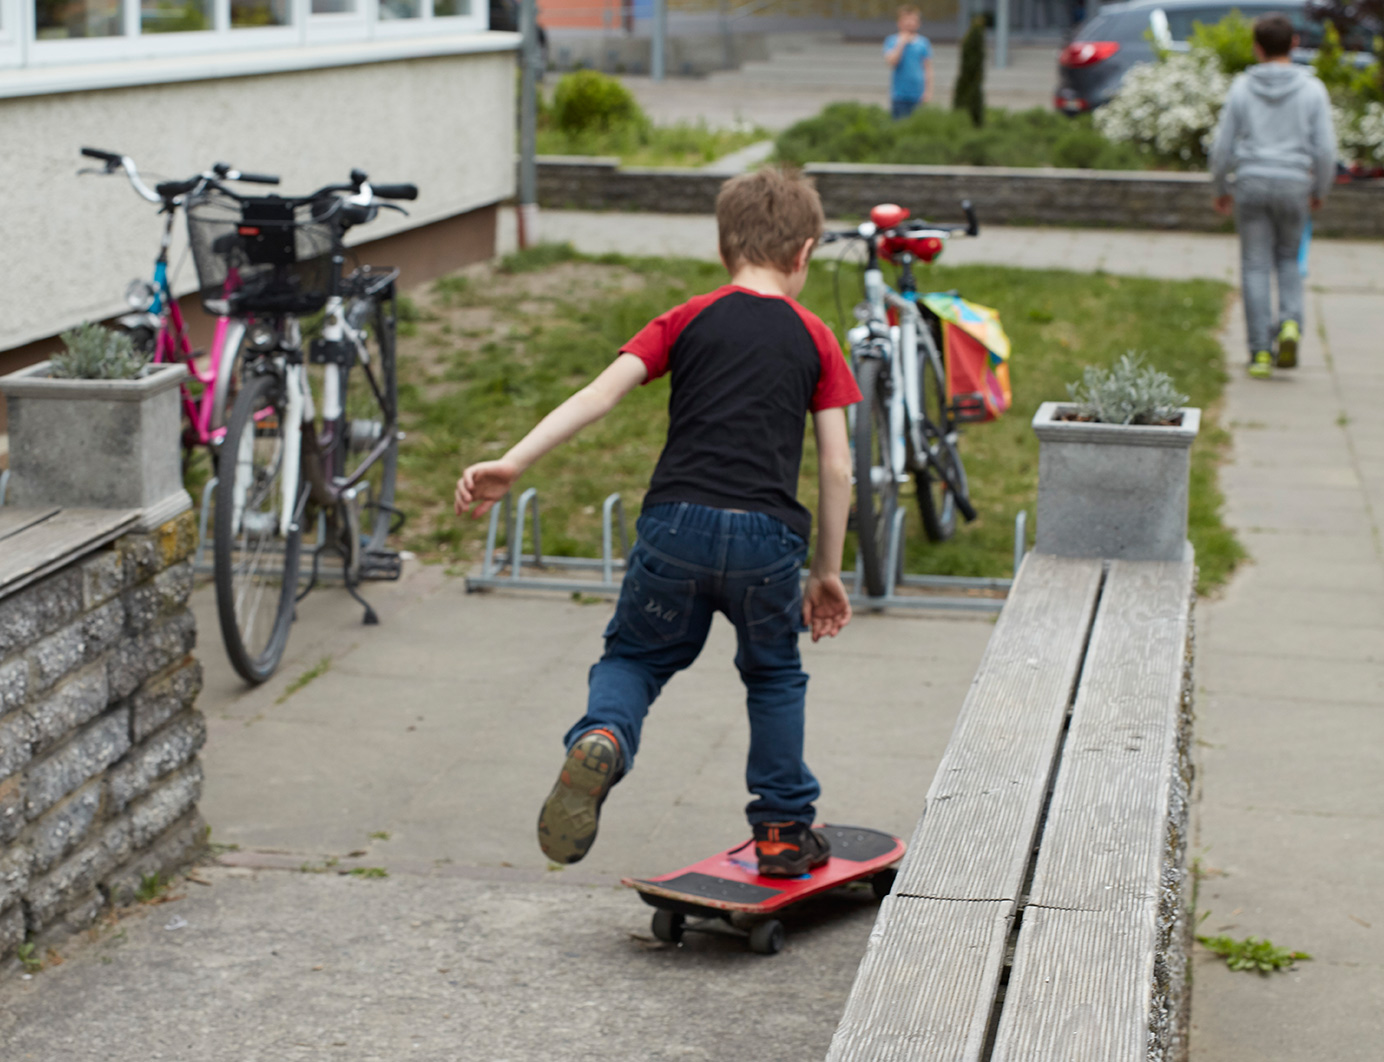 Child skateboarding at The Ark (Photo)